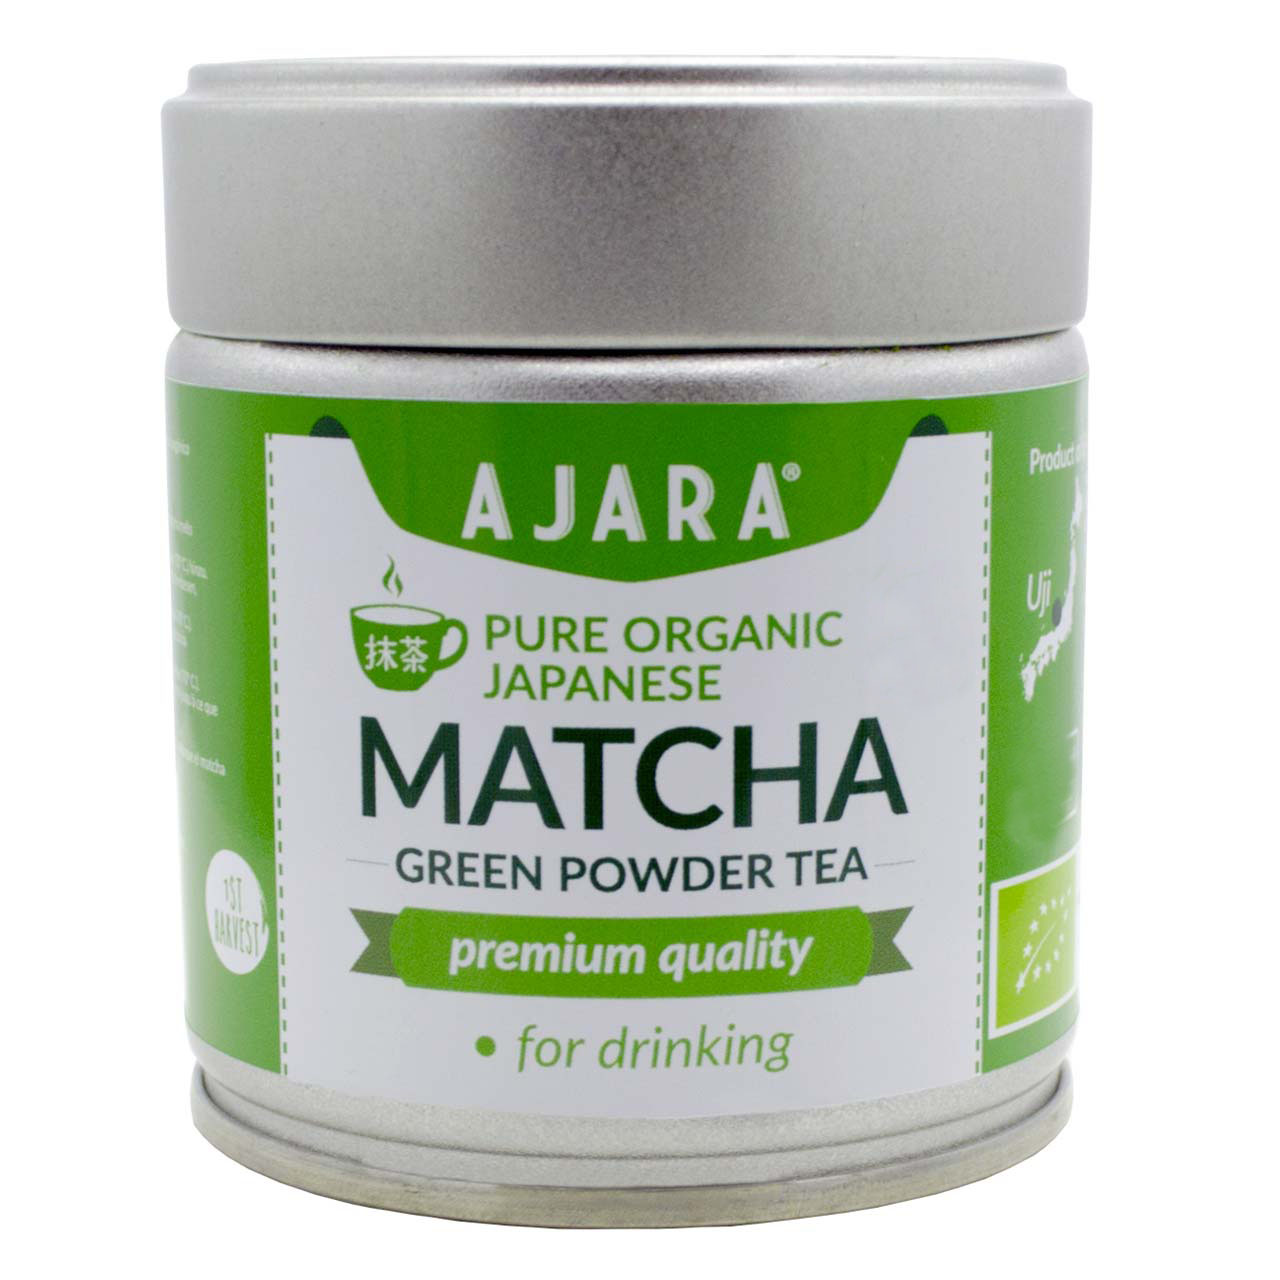 Organic Matcha Green Tea in Japanese powder